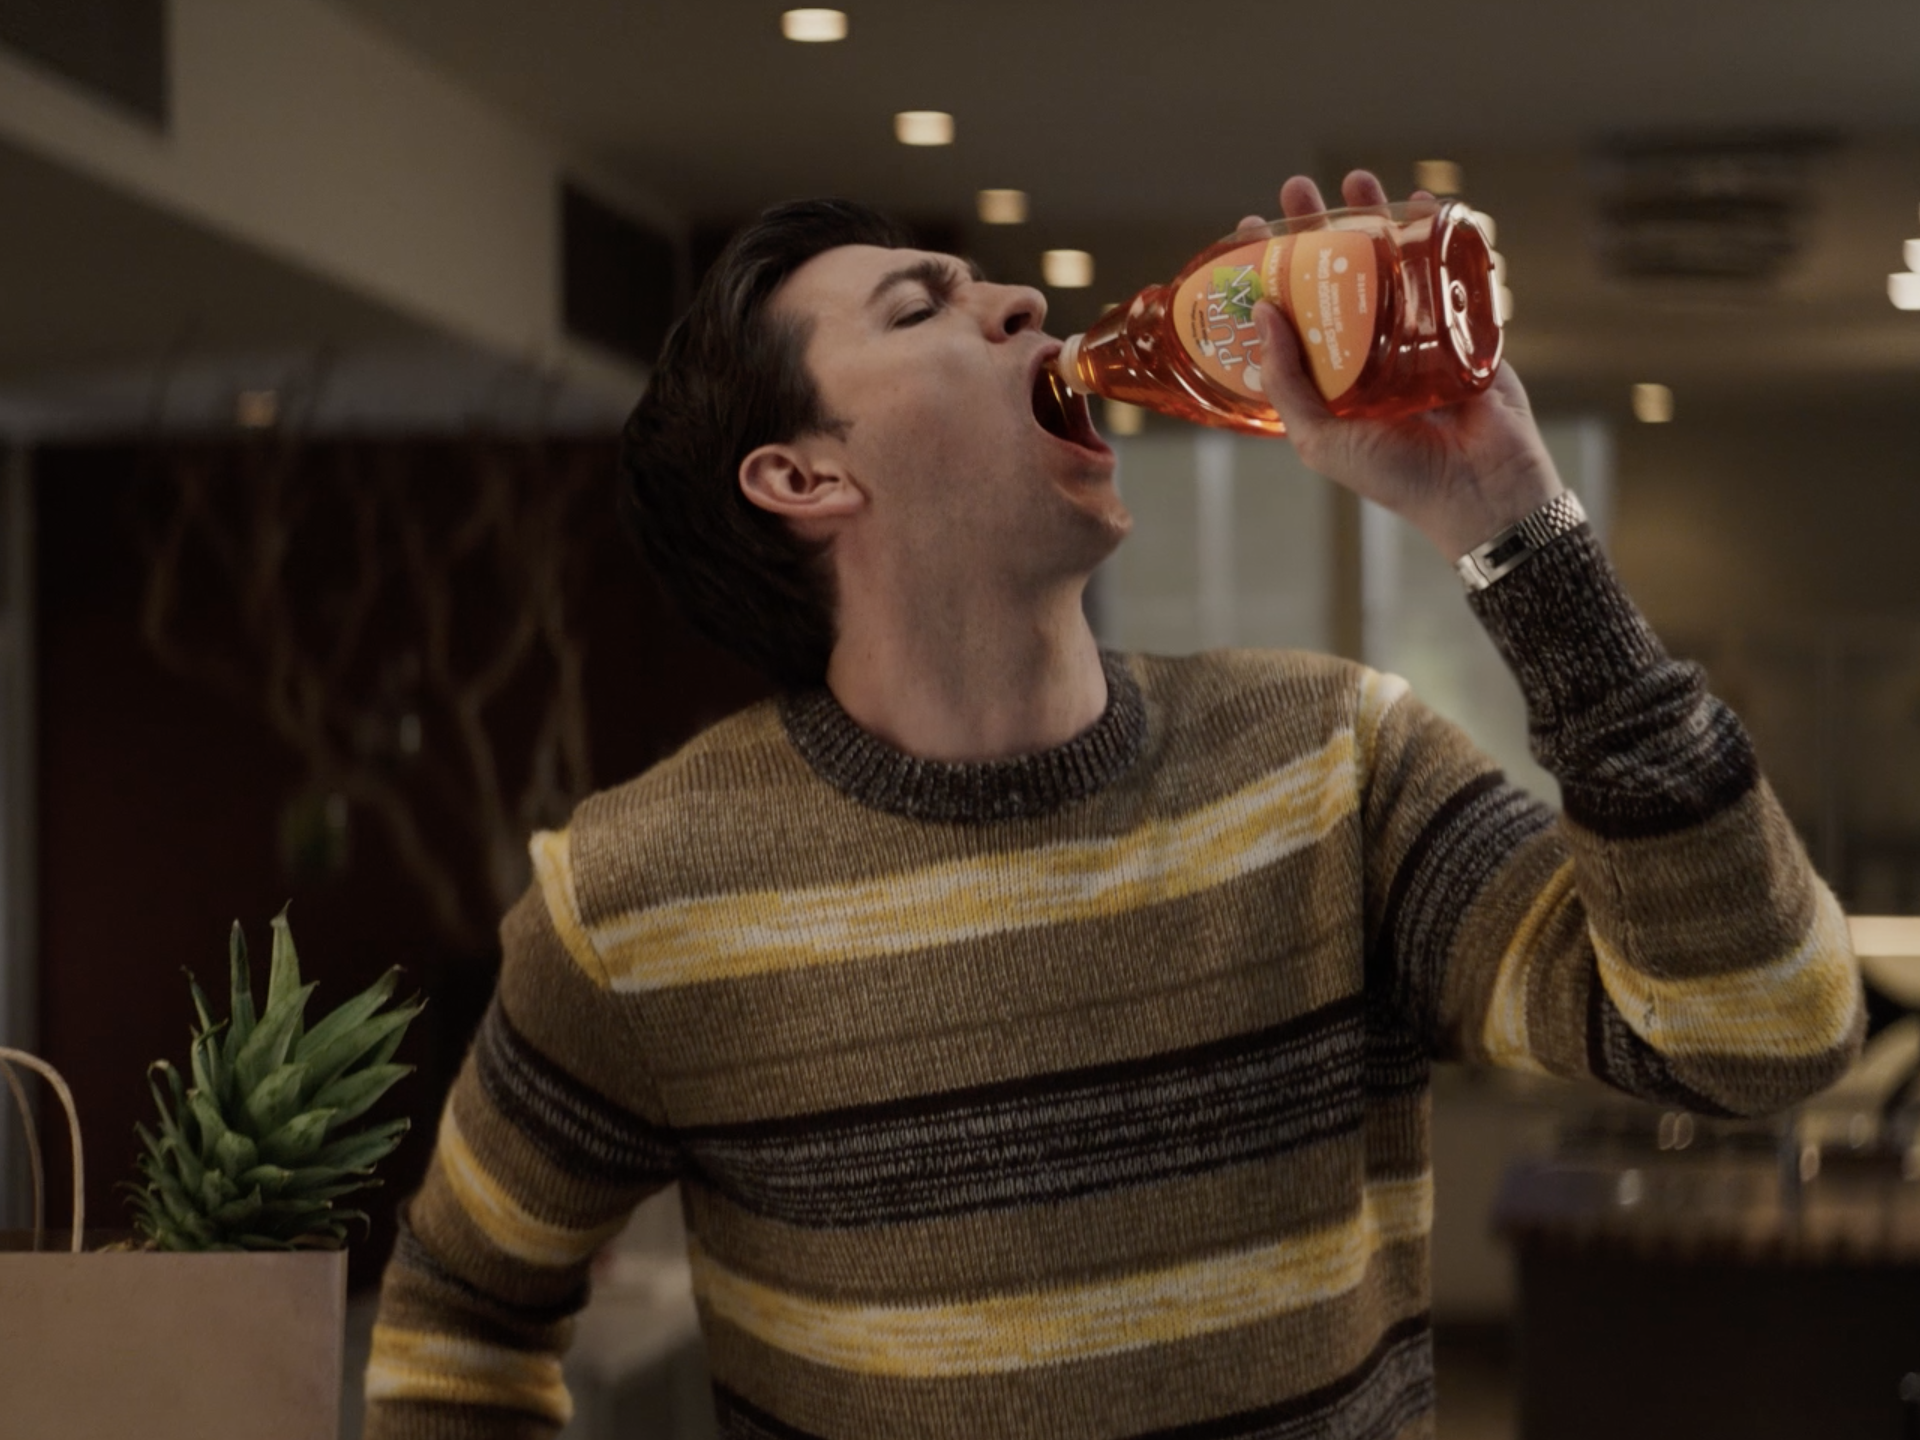 Nicholas Braun eating dish soap in an UberEats ad.